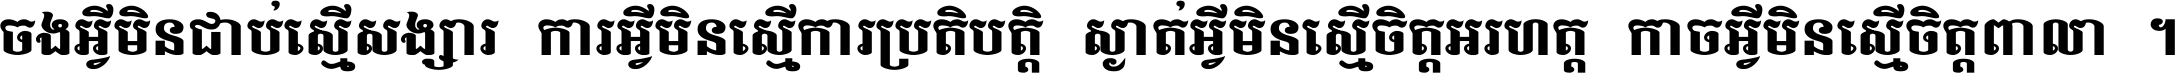 Khmer Mondulkiri A 8 Bold